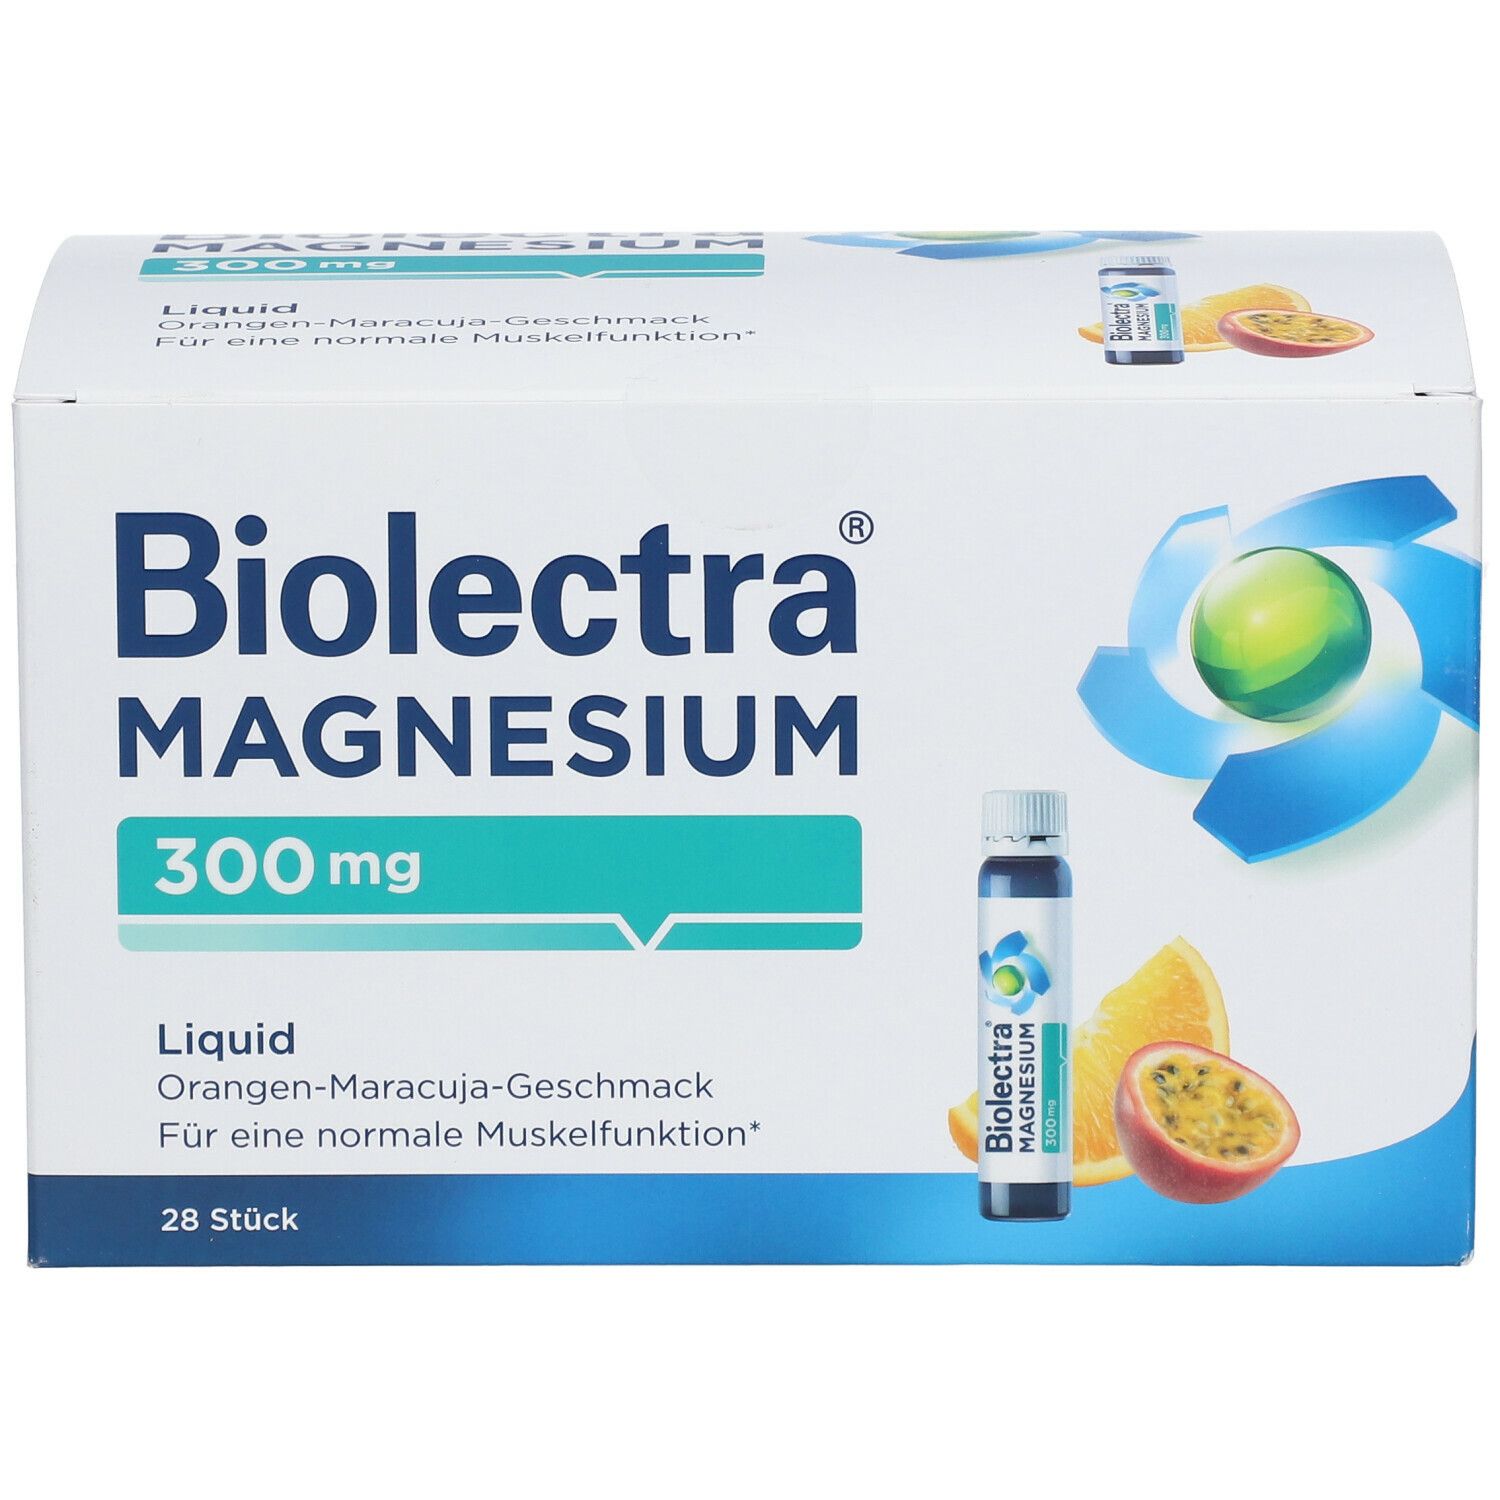 Biolectra® Magnesium 300 mg